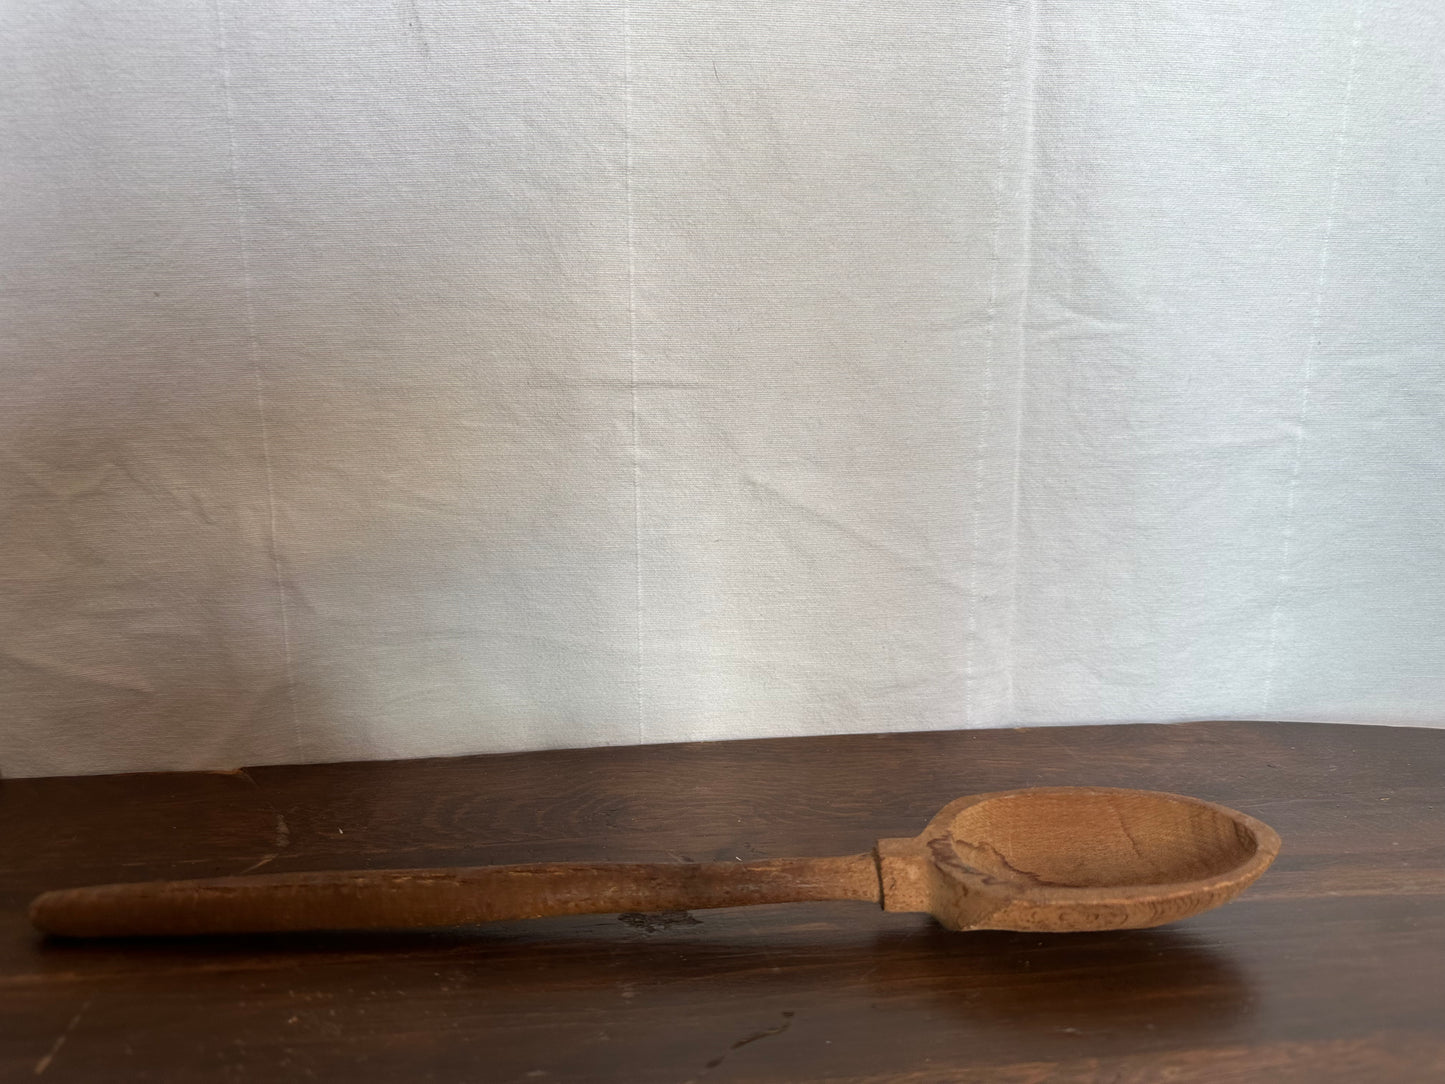 Dark wooden spoon